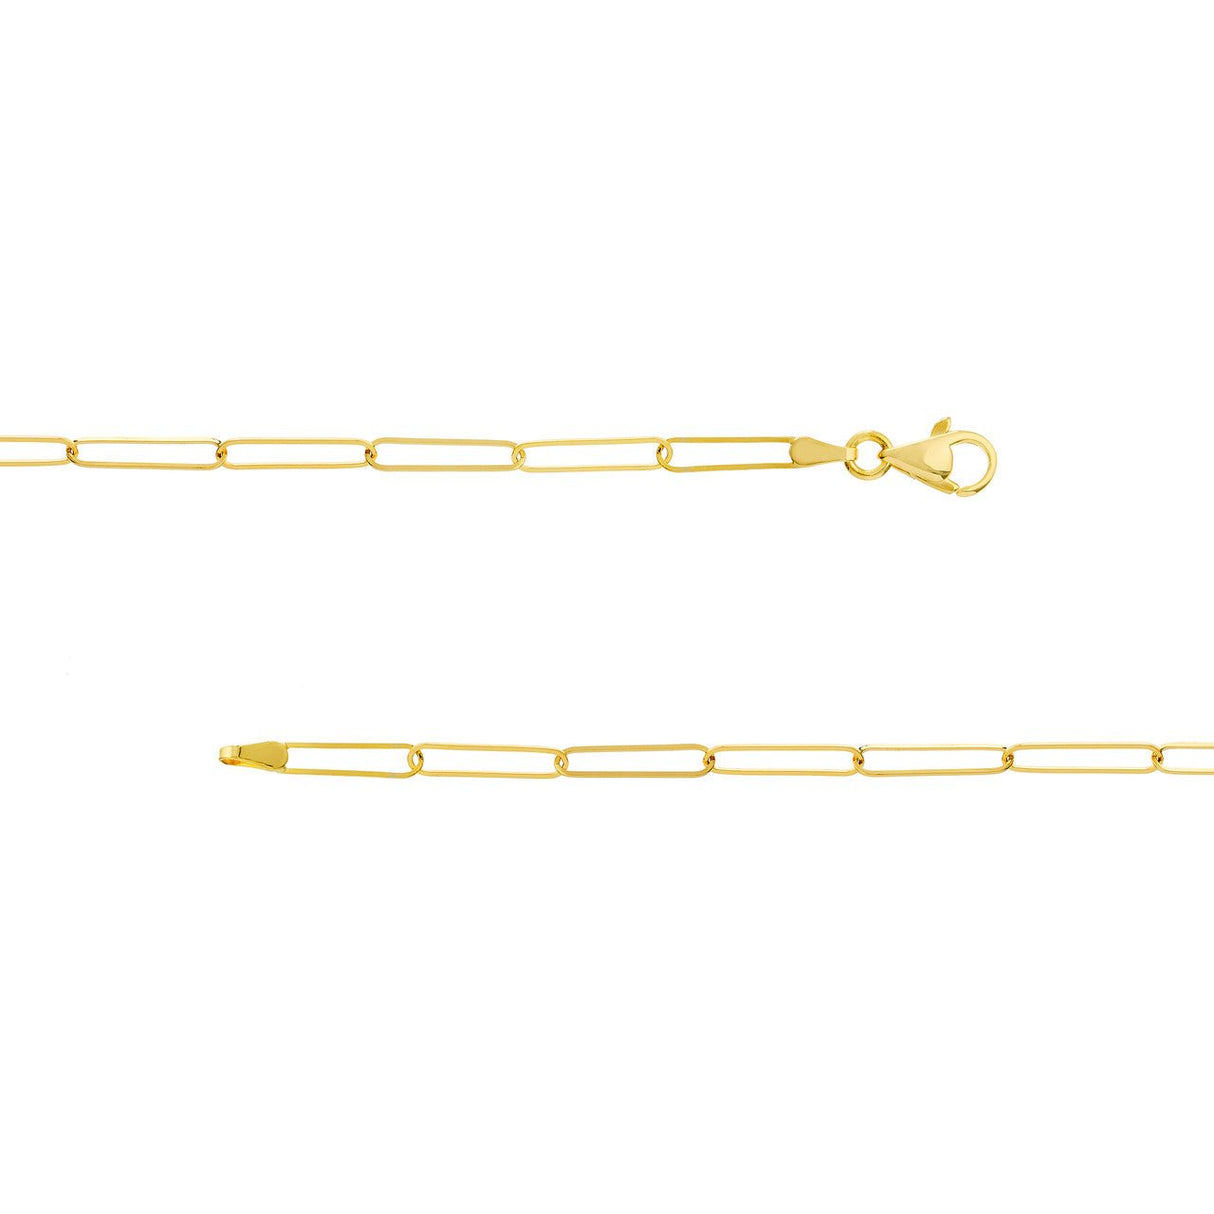 14K Gold Chain, 20", Paper Clip Chain with Pear Lock 3,6mm, Gold Chain Necklace, Gold Layered Chain, - Diamond Origin